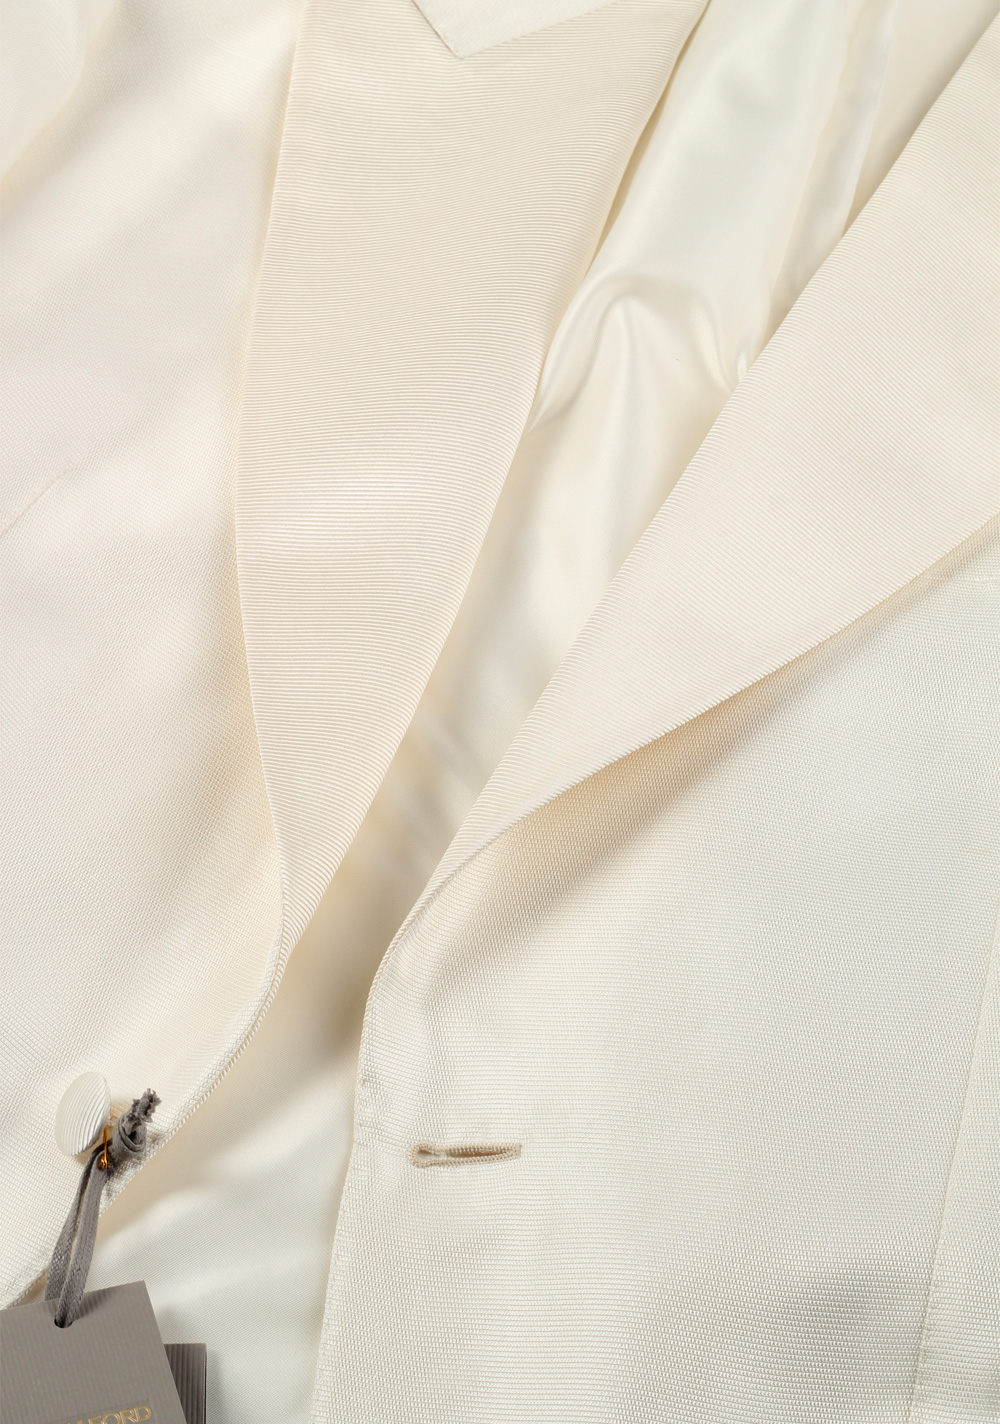 TOM FORD Off White James Bond Spectre Sport Coat Tuxedo Dinner Jacket Size 48 / 38R U.S. Fit A | Costume Limité